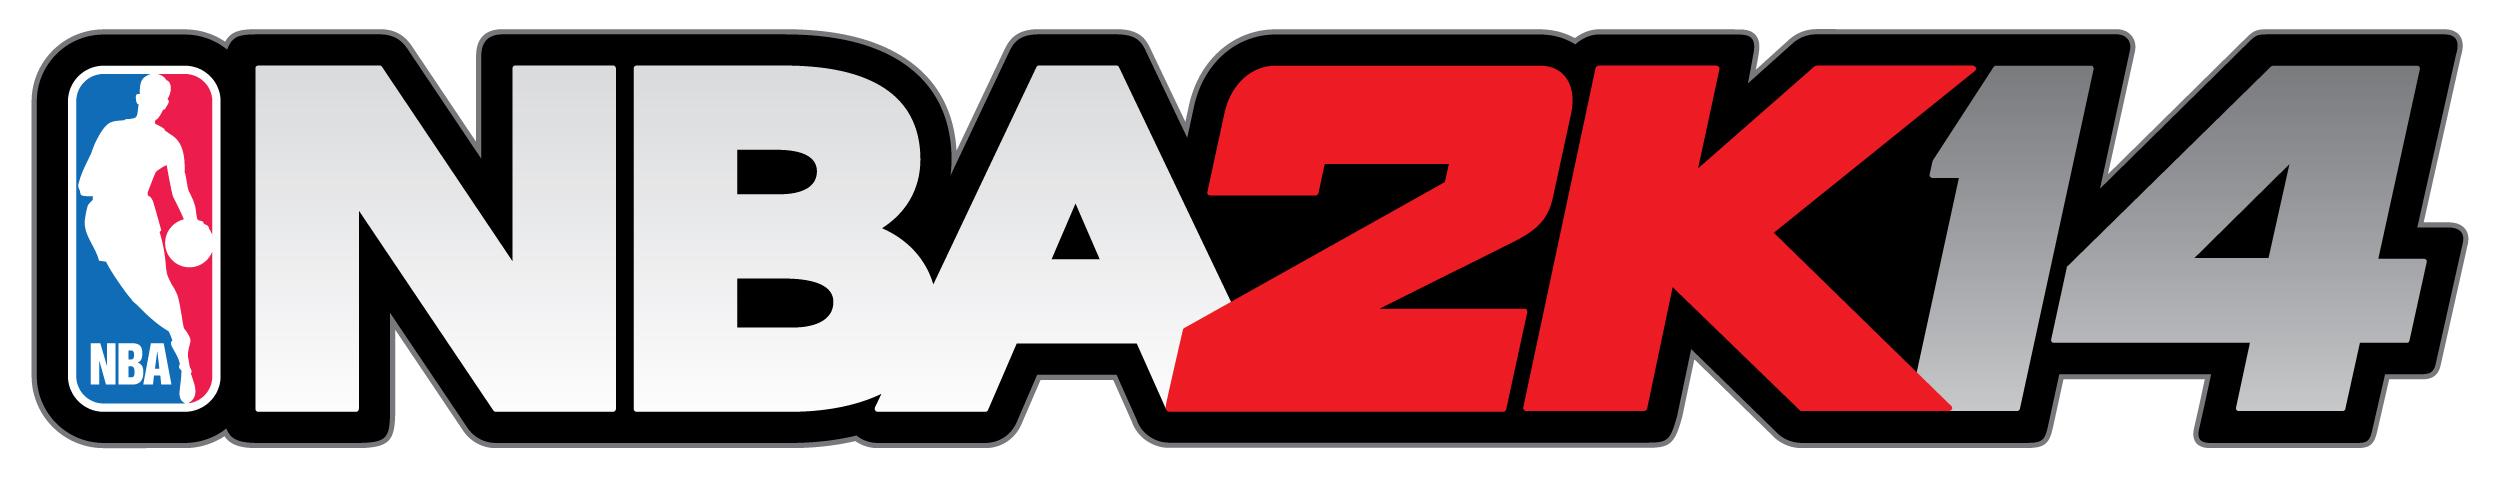 2K Releases NBA 2K14 Next Gen Eco-Motion Trailer